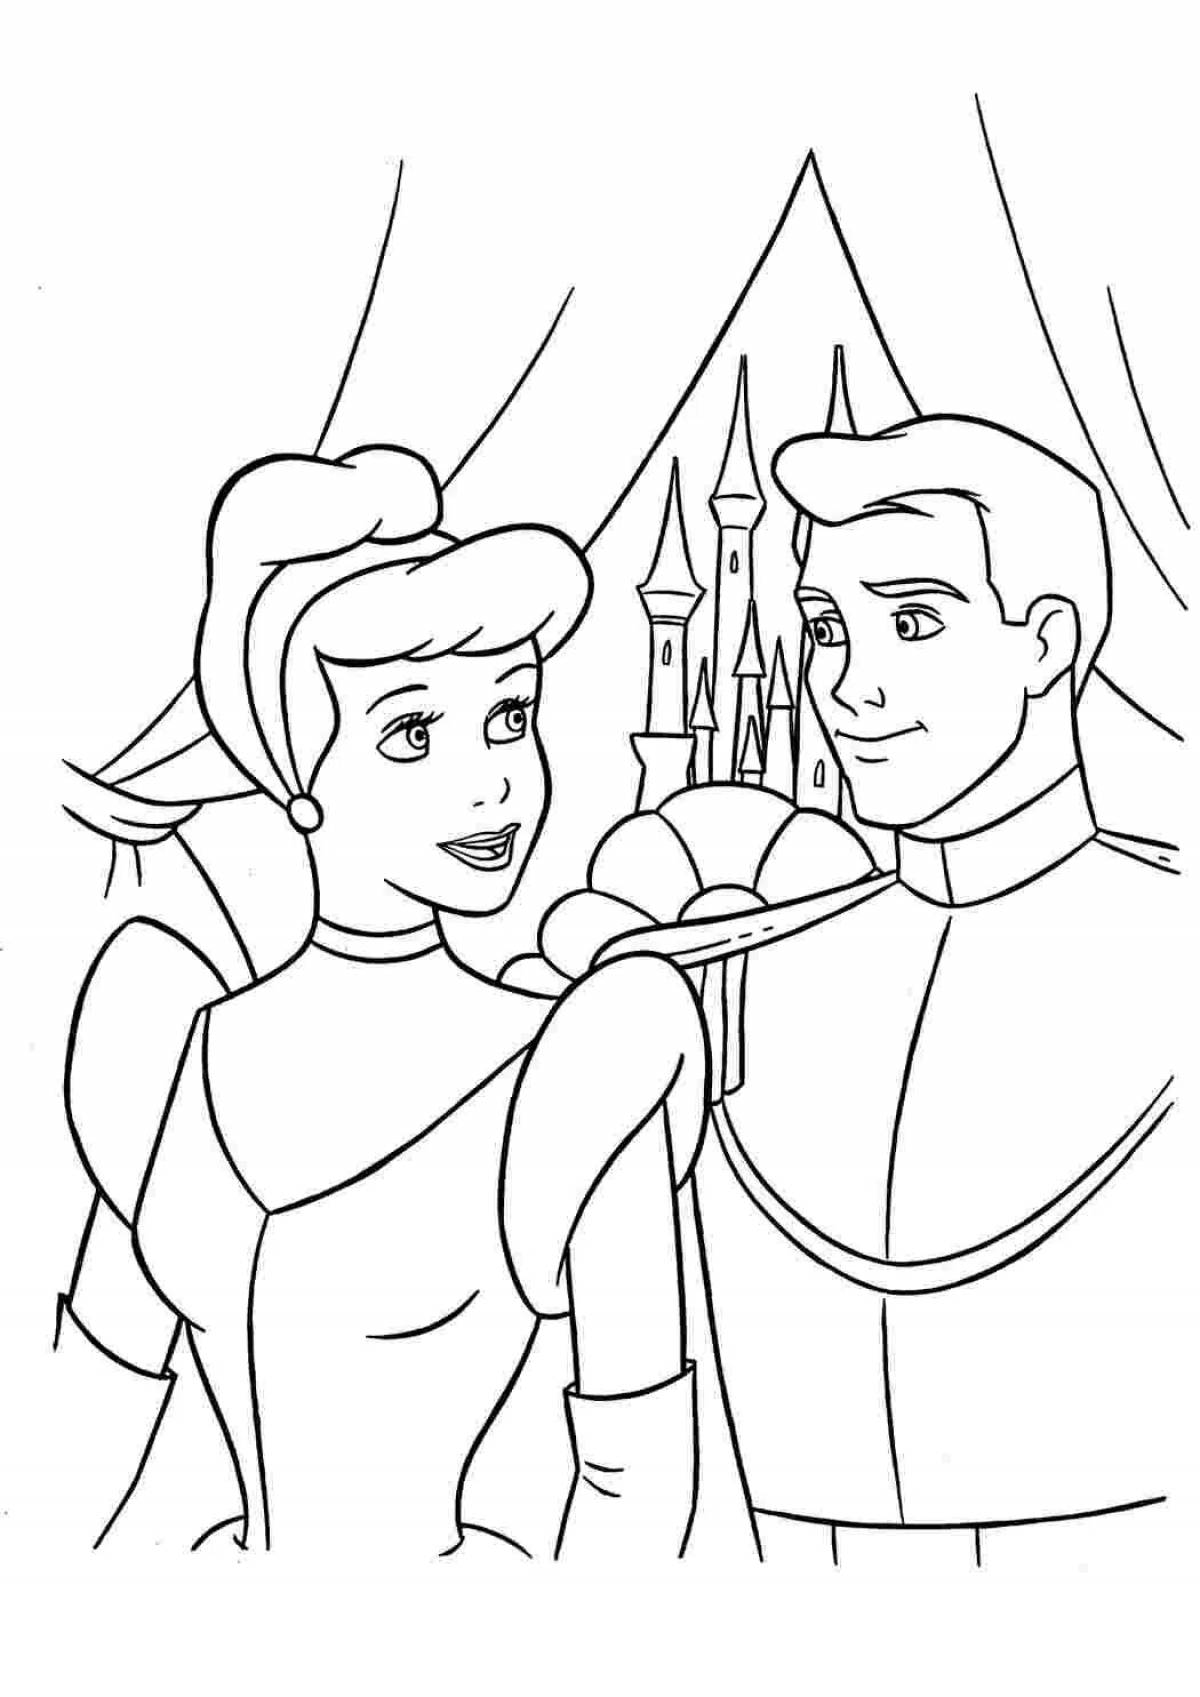 Coloring book shiny Cinderella and Prince